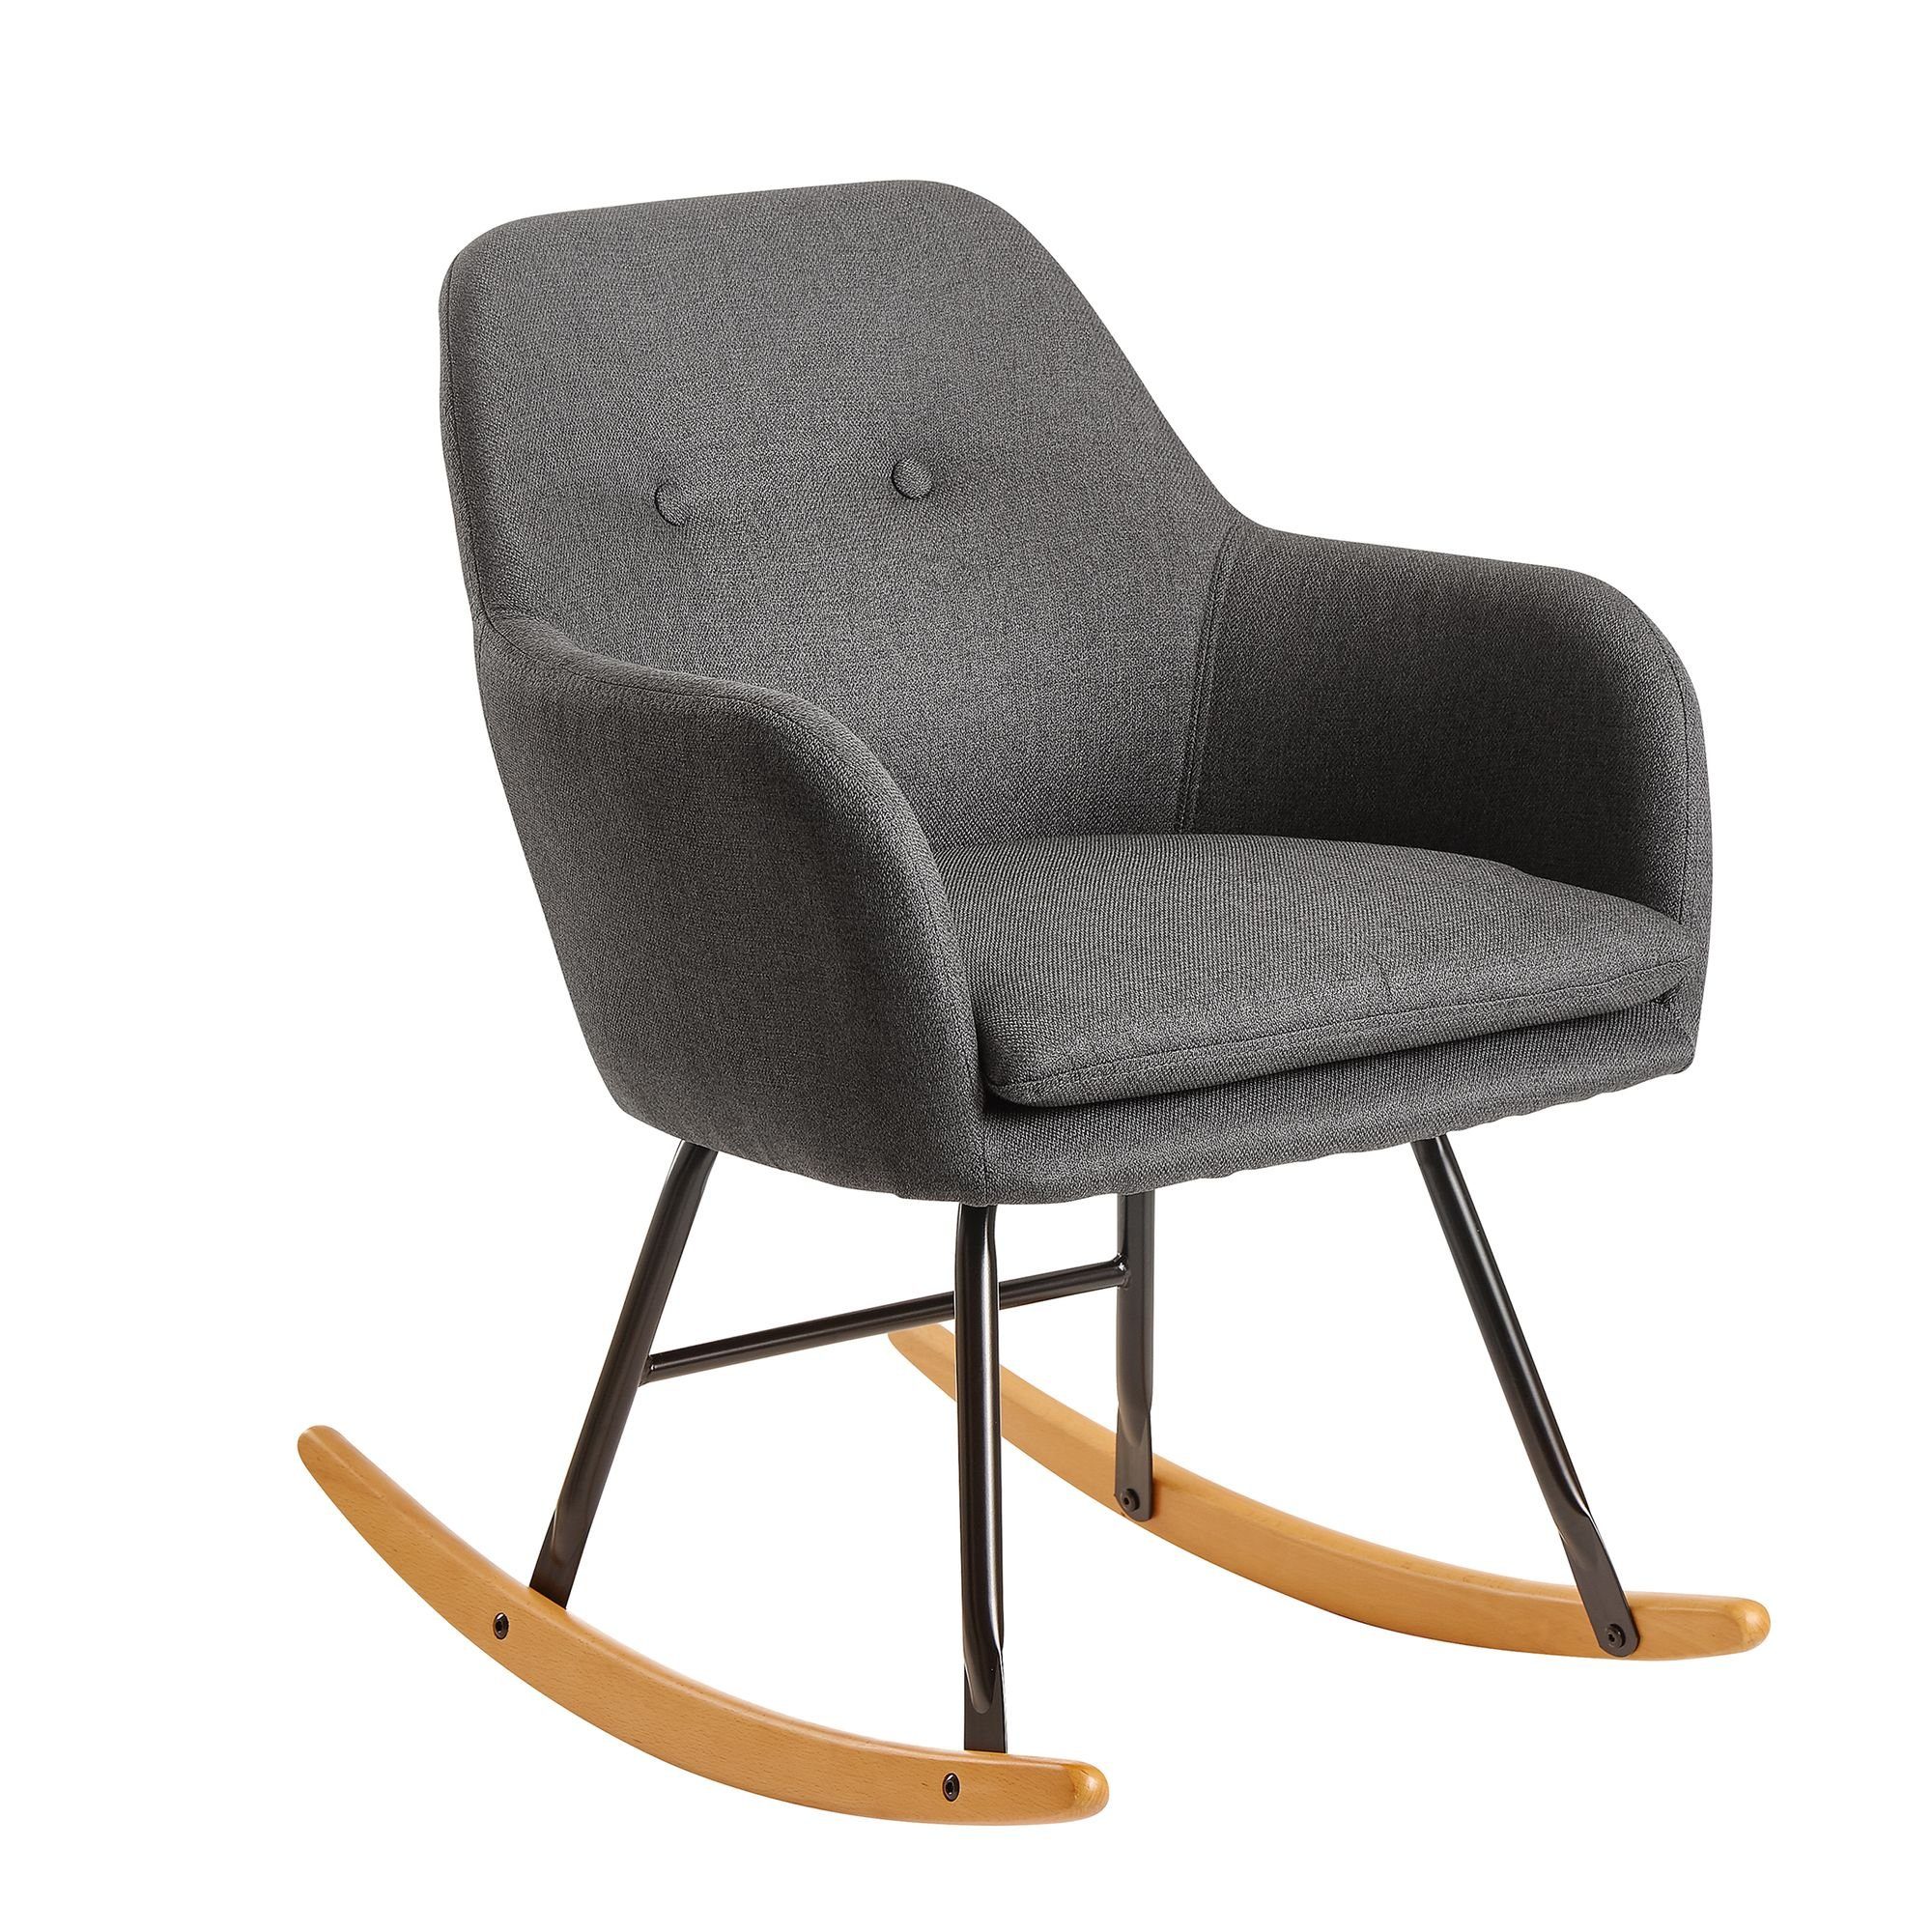 KADIMA DESIGN Schaukelstuhl Gemütlicher Stuhl: Skandinavisches Design,  kompakte Größe